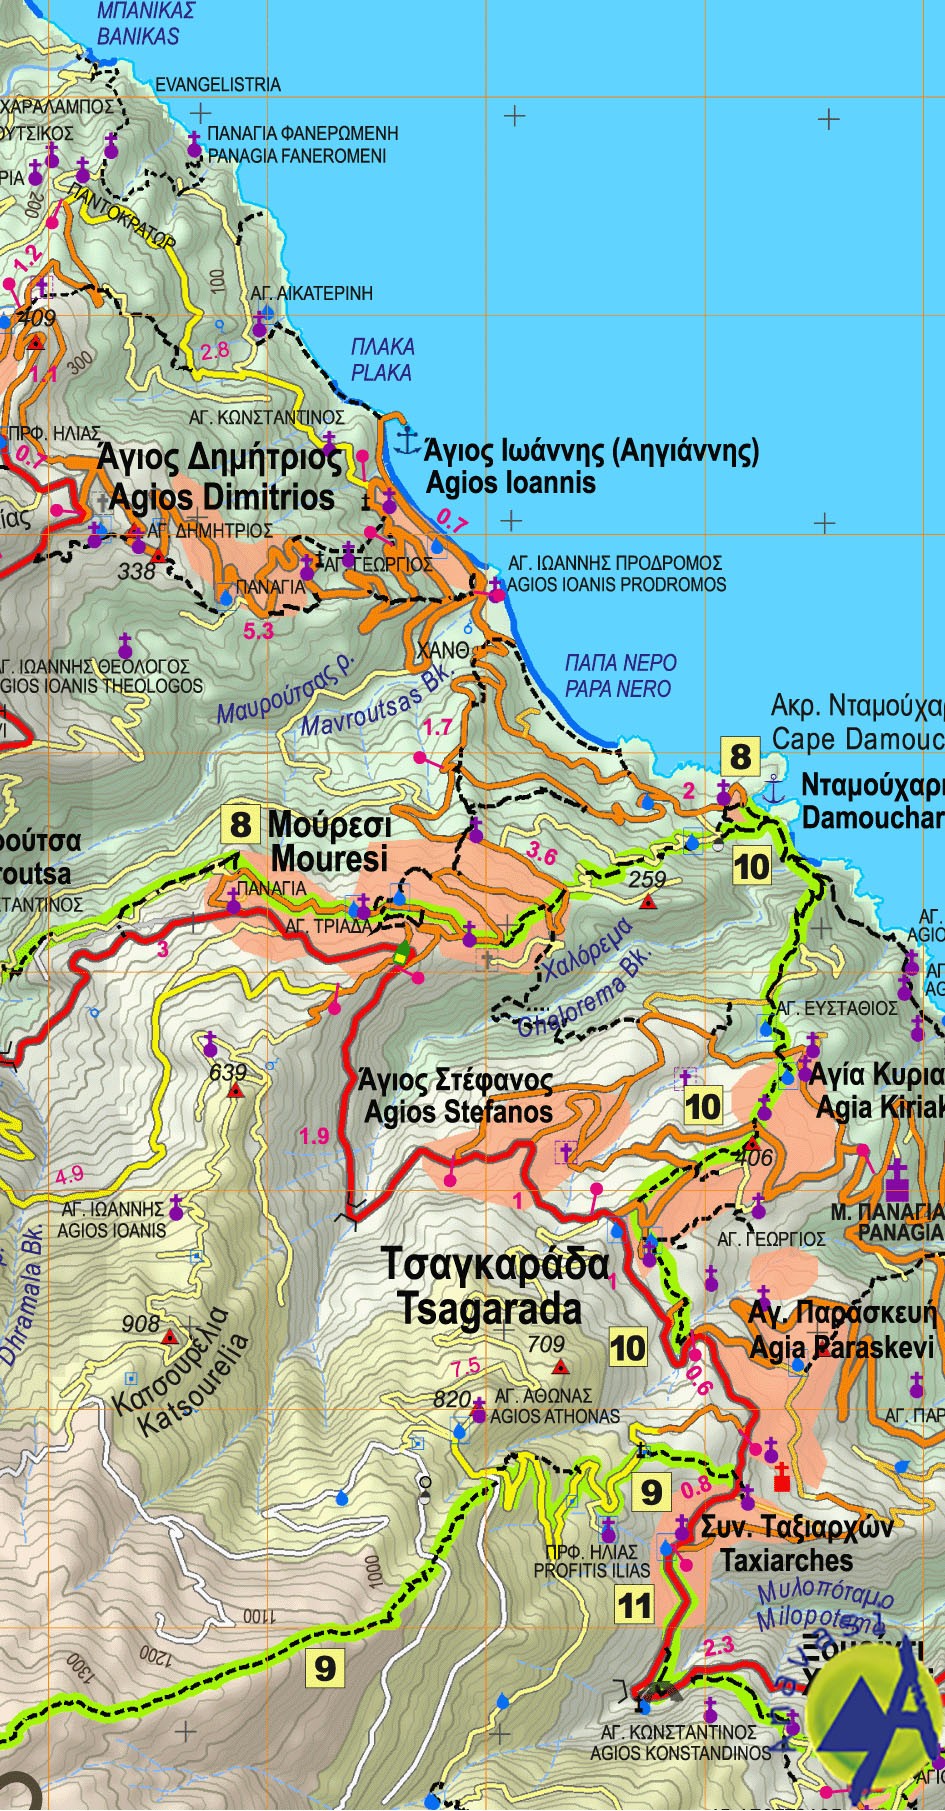 Pilio - Mavrovouni • Hiking map 1:45 000